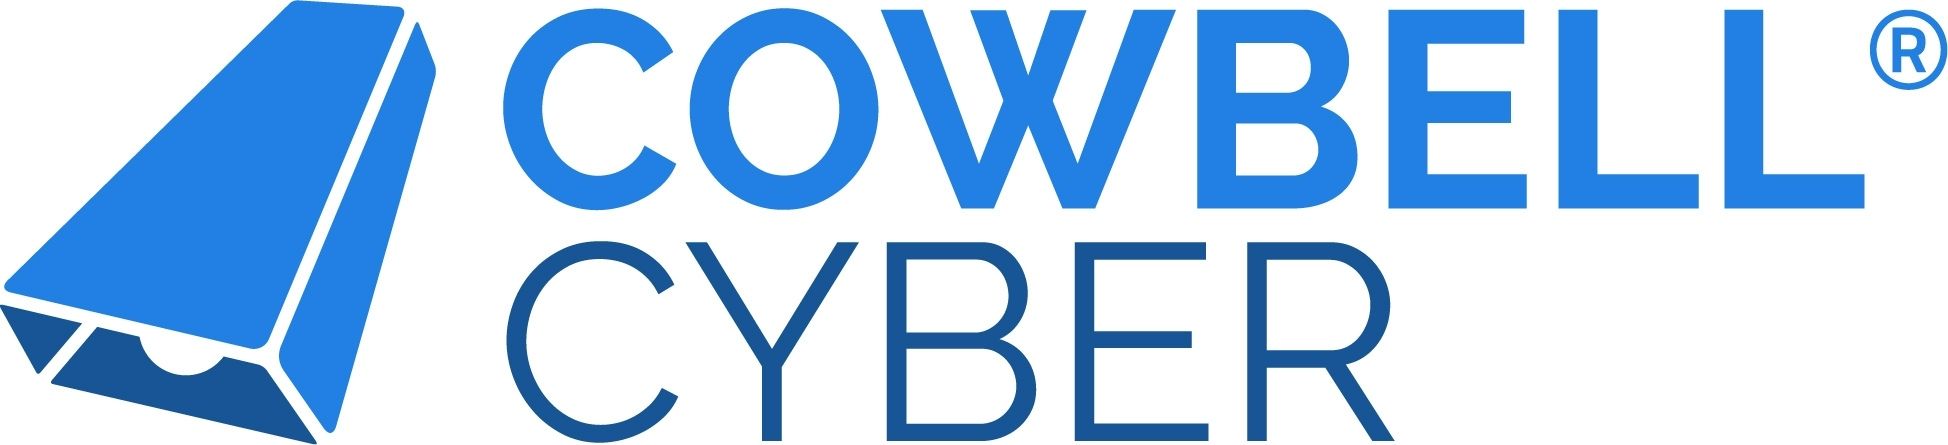 Cowbell Cyber logo.jpg